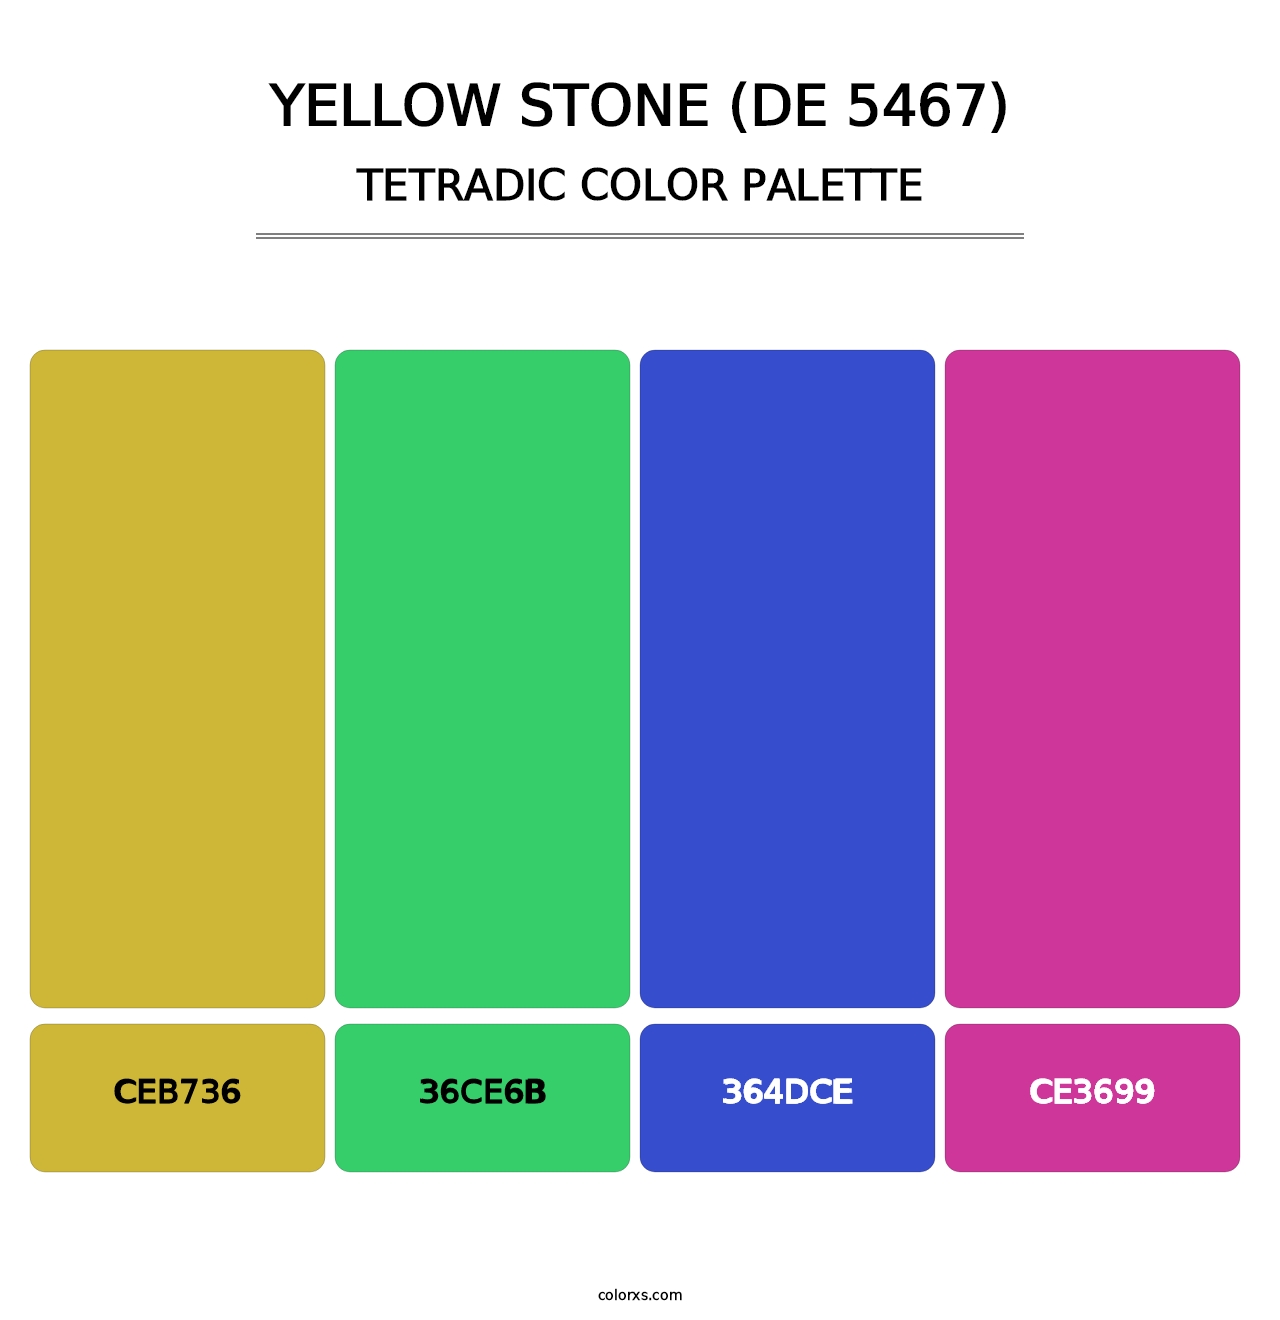 Yellow Stone (DE 5467) - Tetradic Color Palette